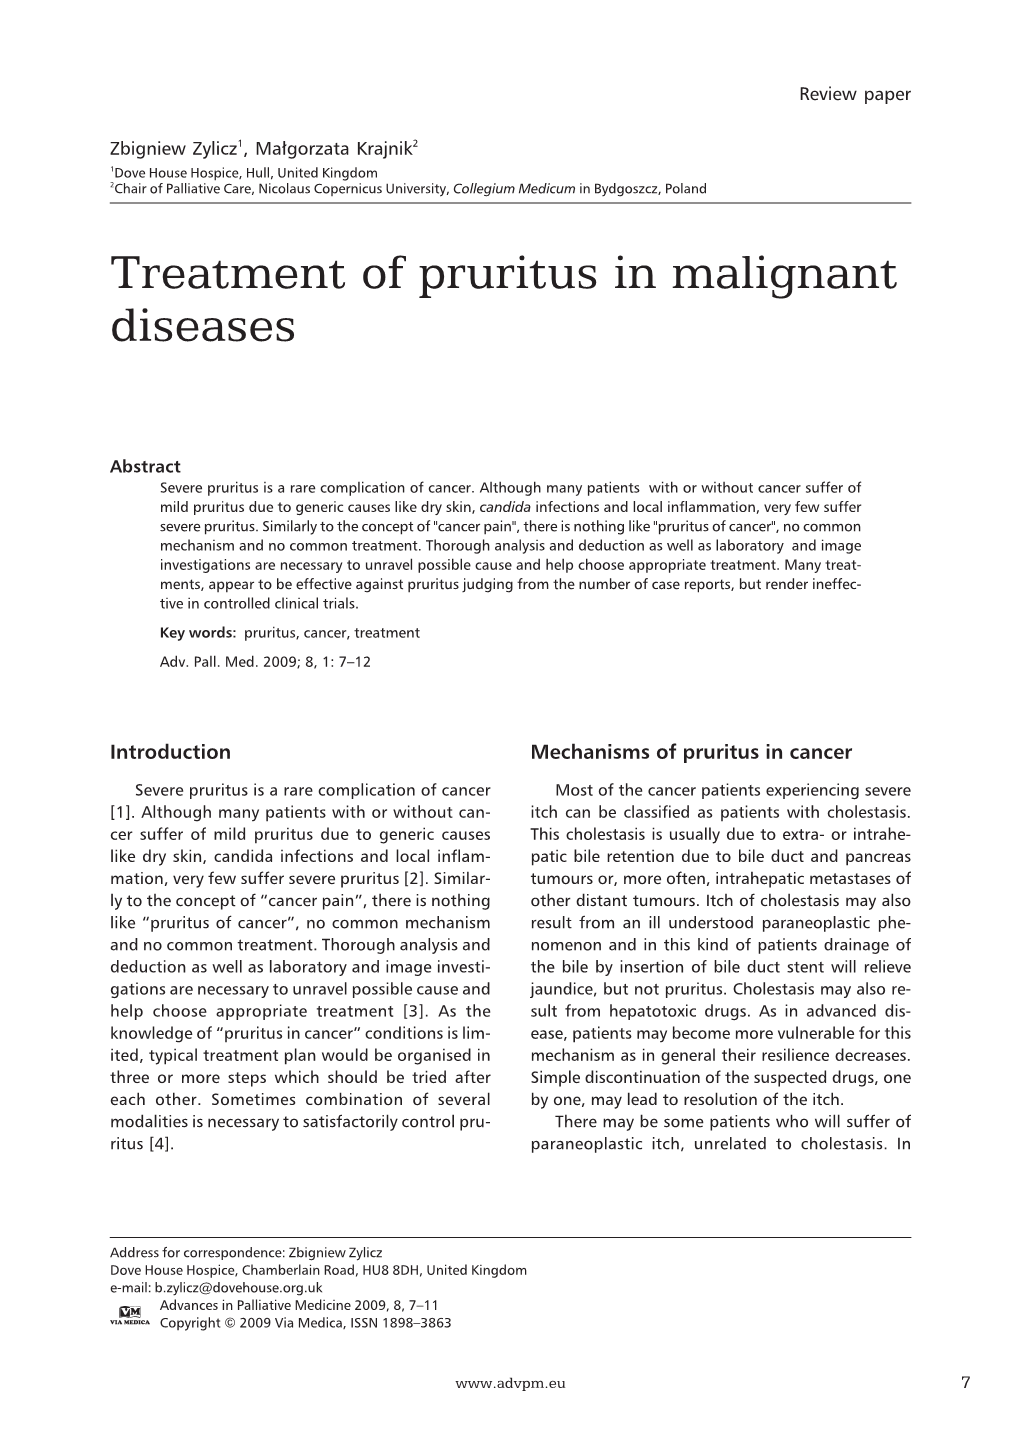 Treatment of Pruritus in Malignant Diseases